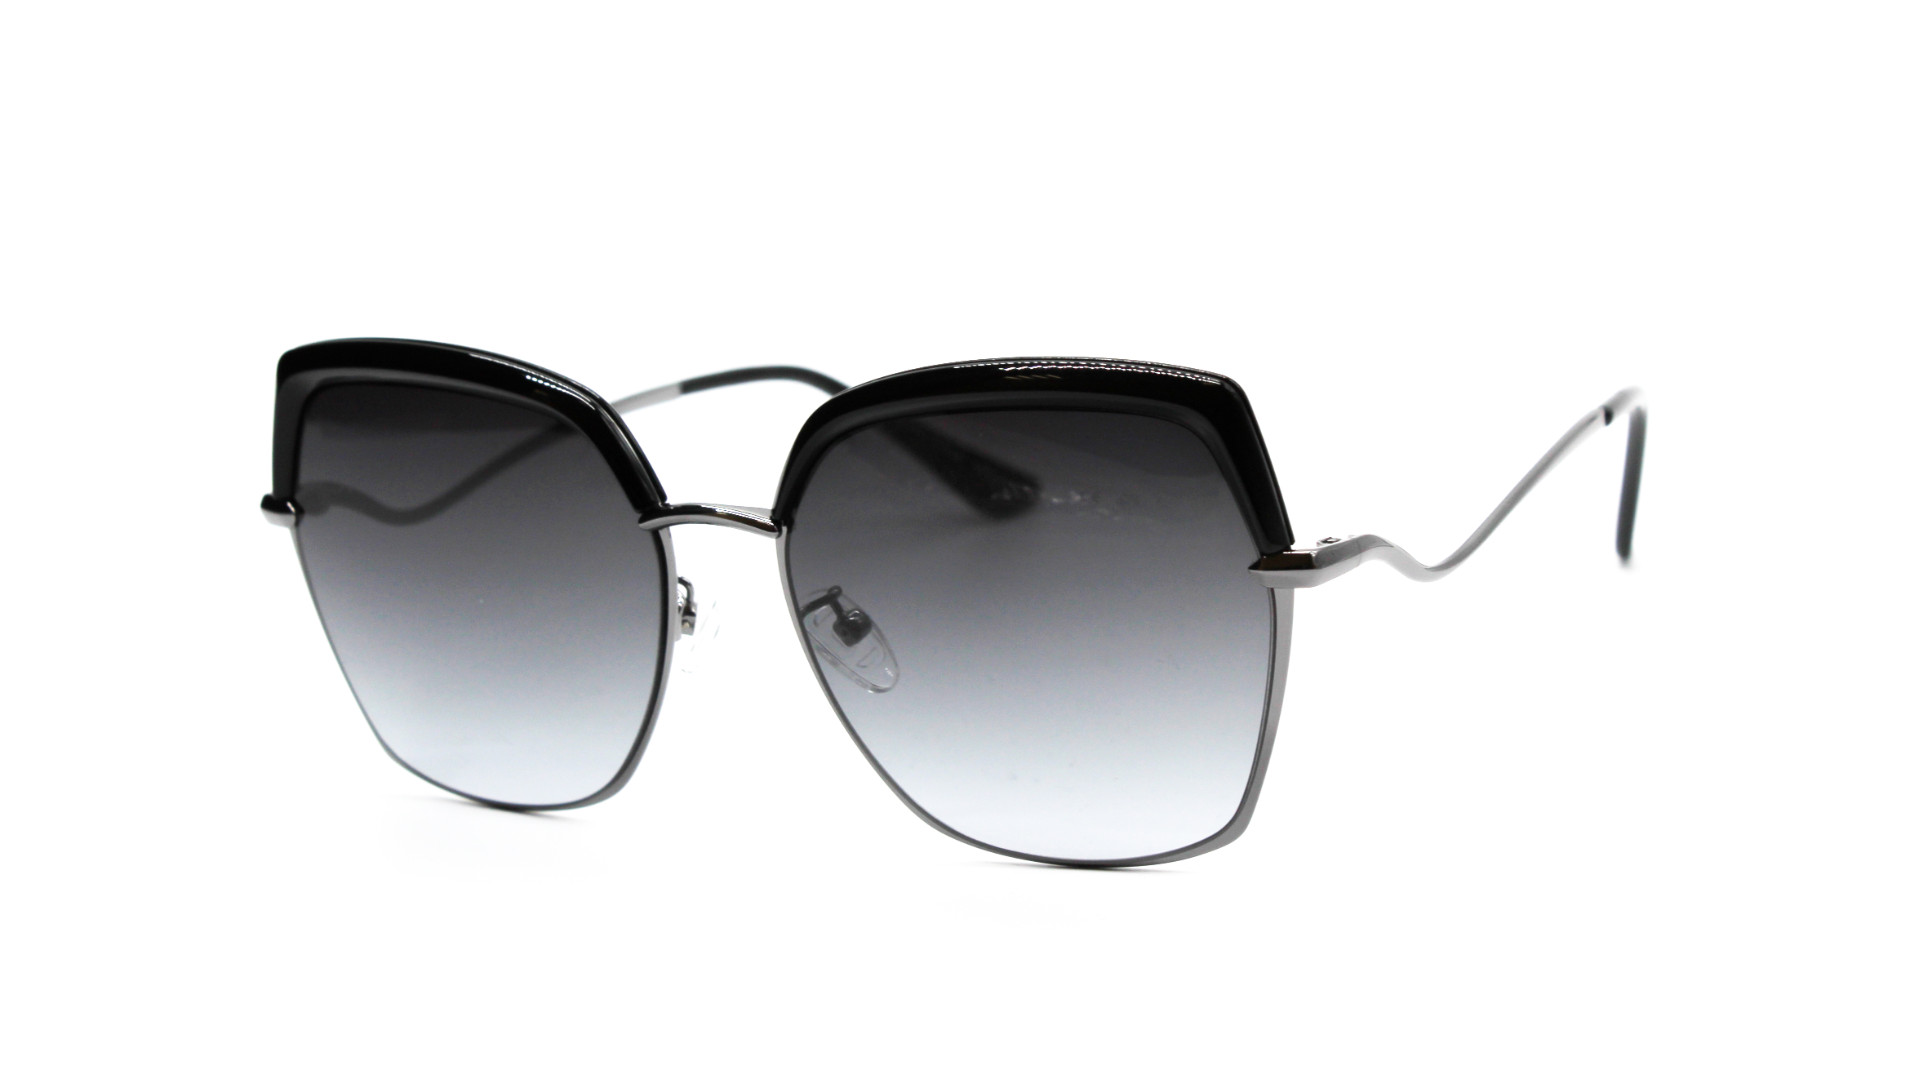 Солнцезащитные очки St.Louise 50040 C01 с/з